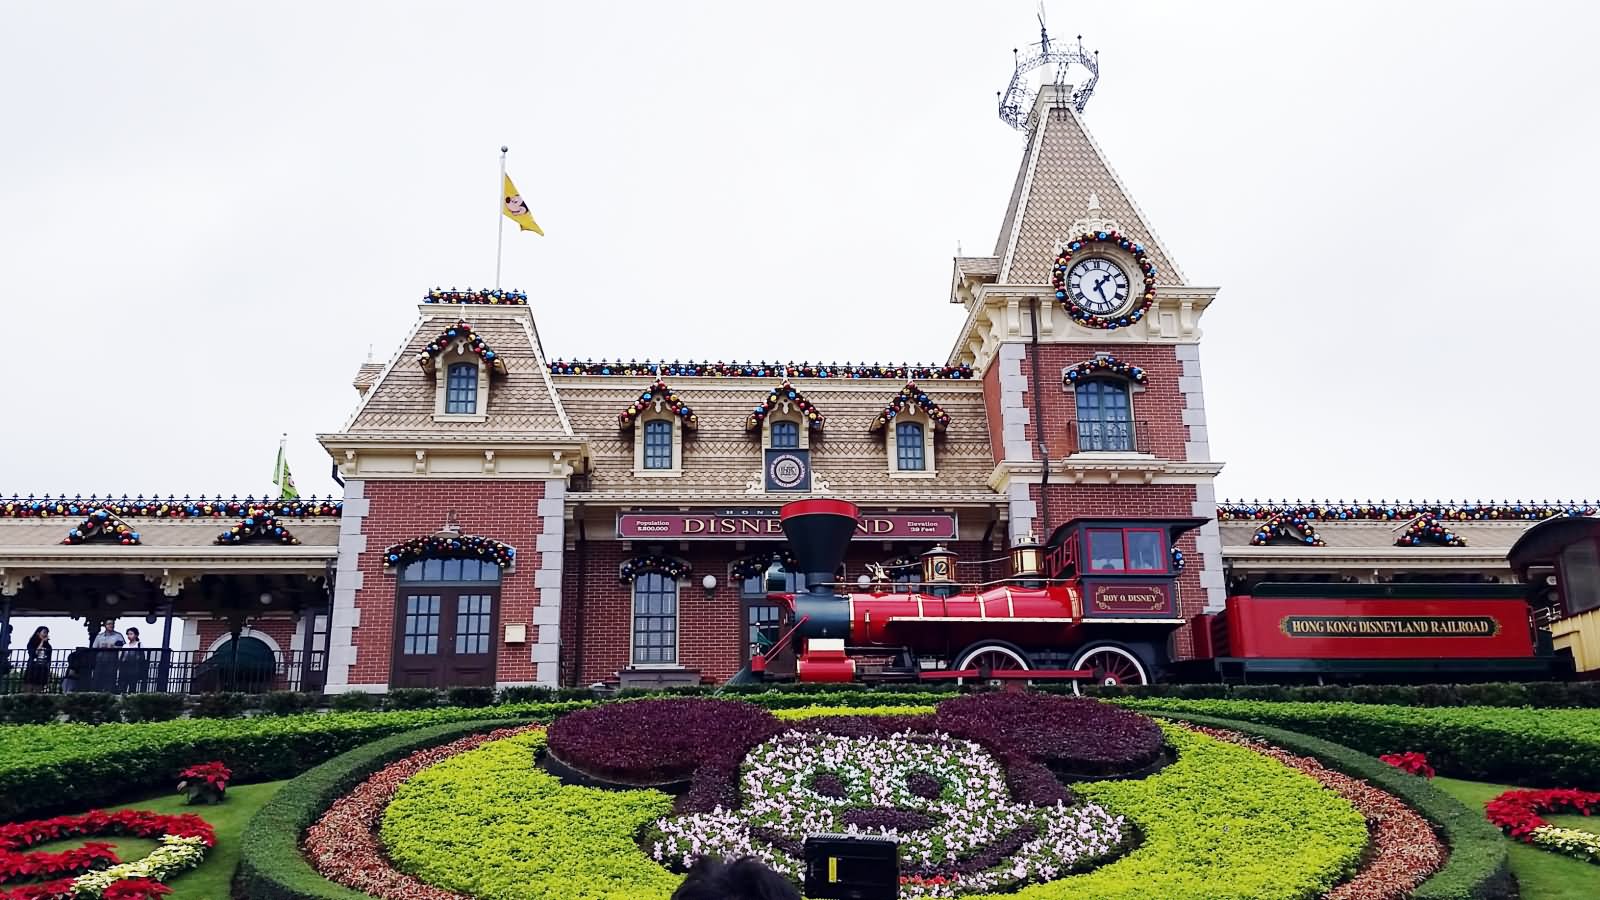 Disneyland Hong Kong Railroad Picture